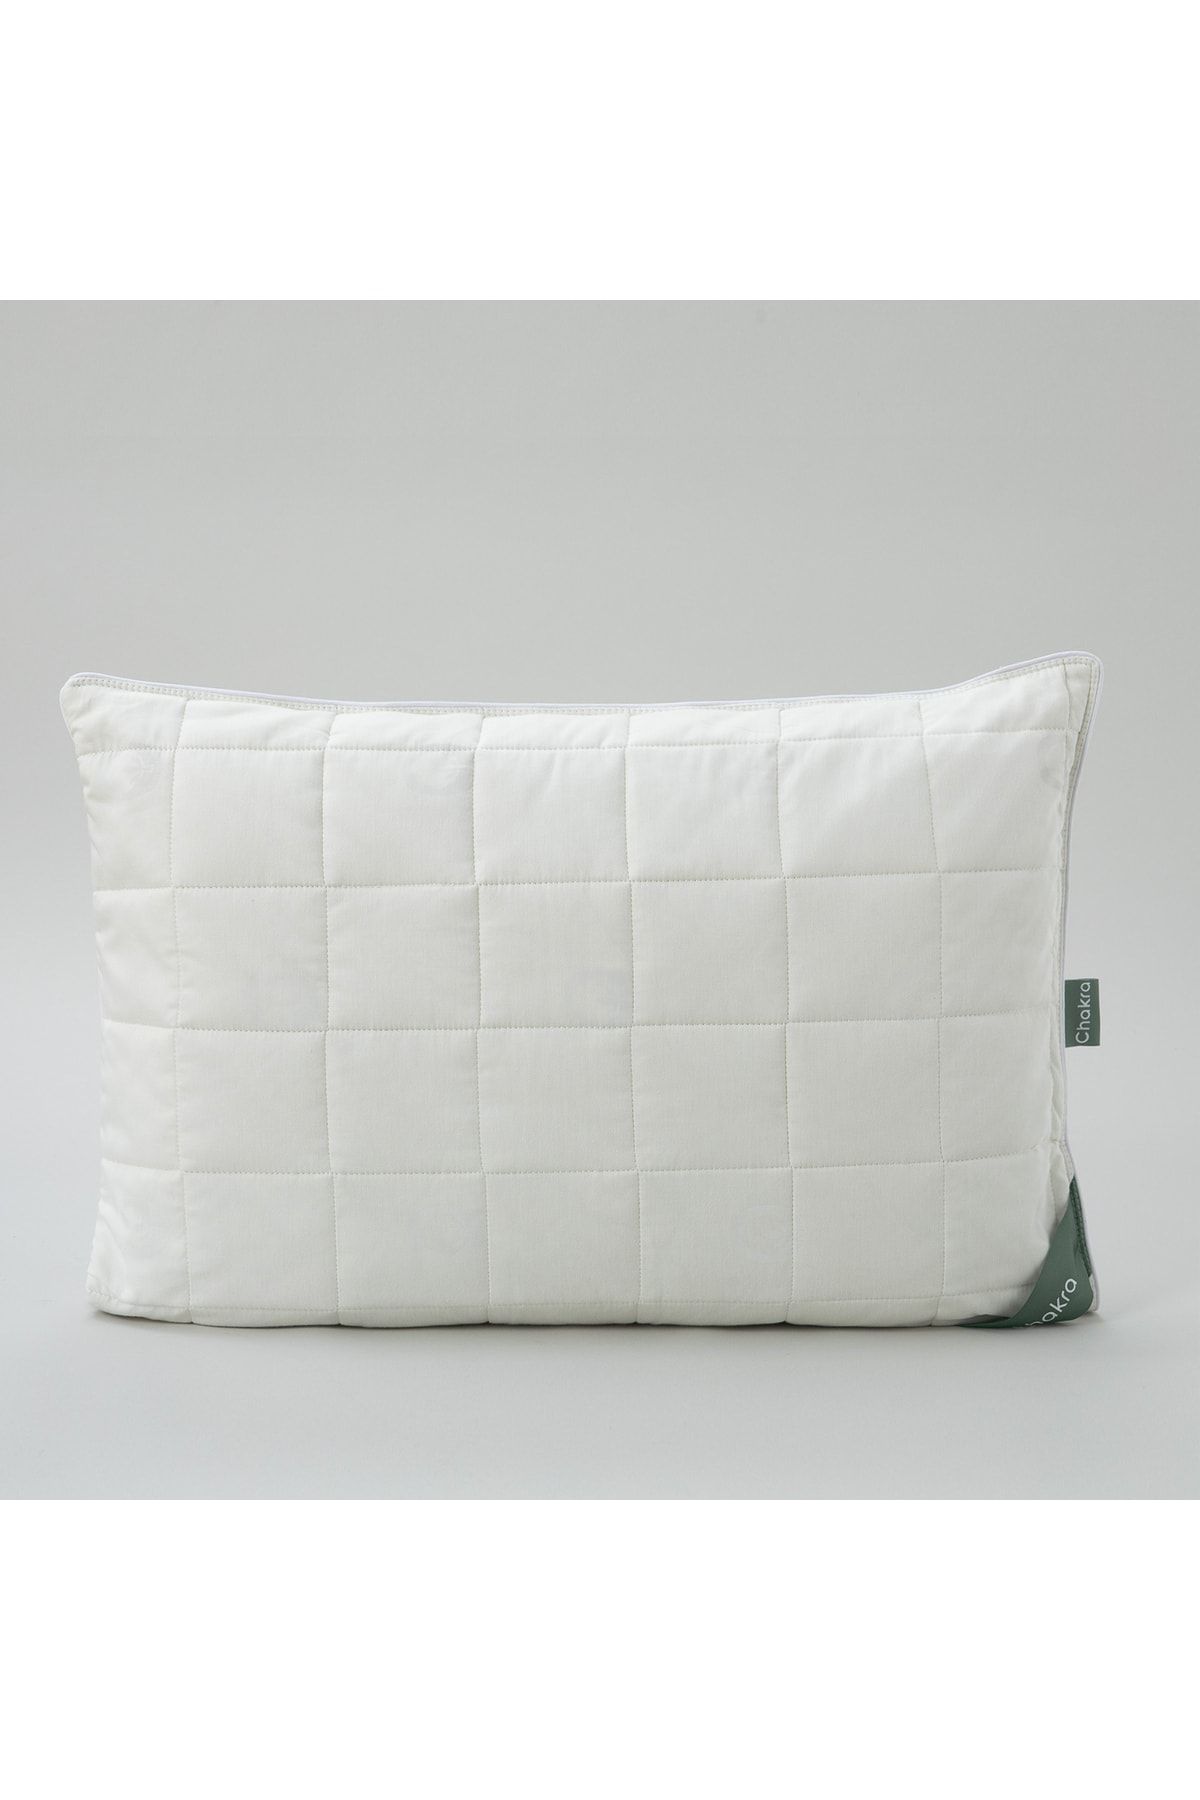 Chakra Comfy Pamuk Yastık 50x70 Cm Beyaz